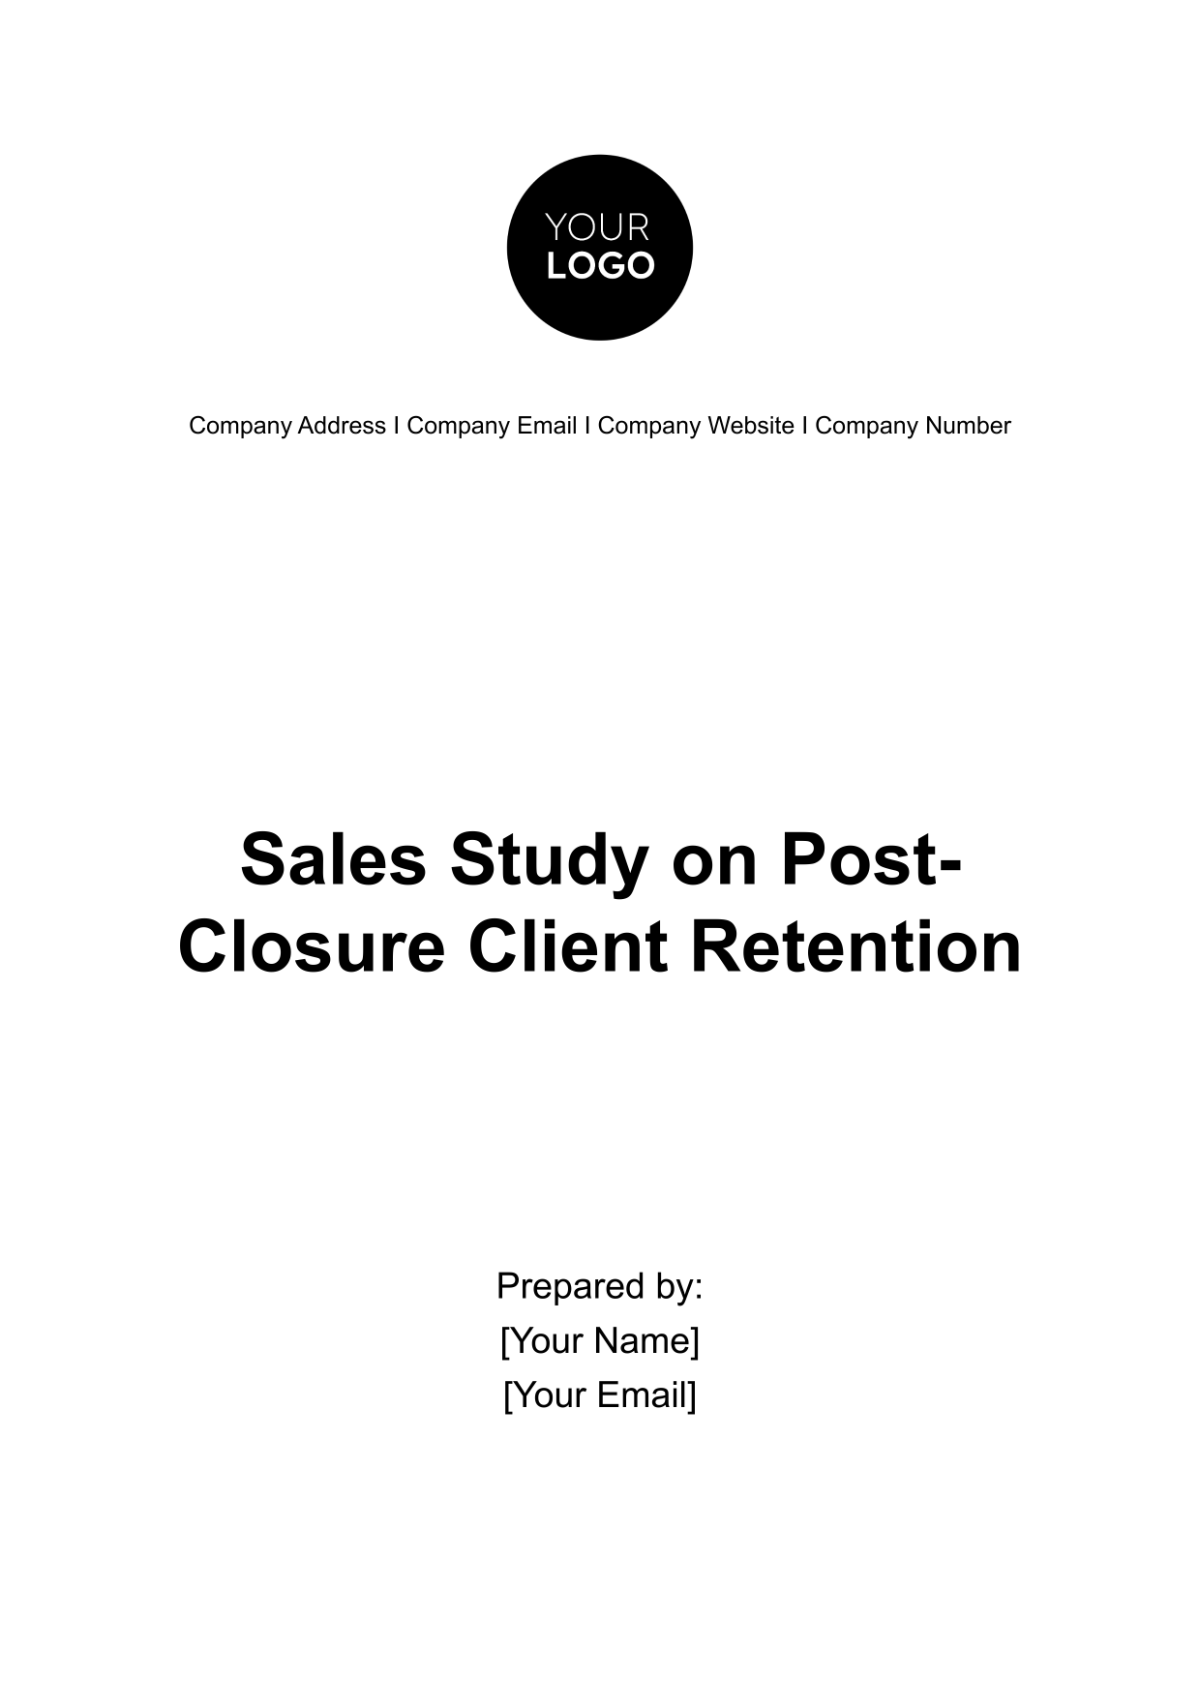 Sales Study on Post-Closure Client Retention Template